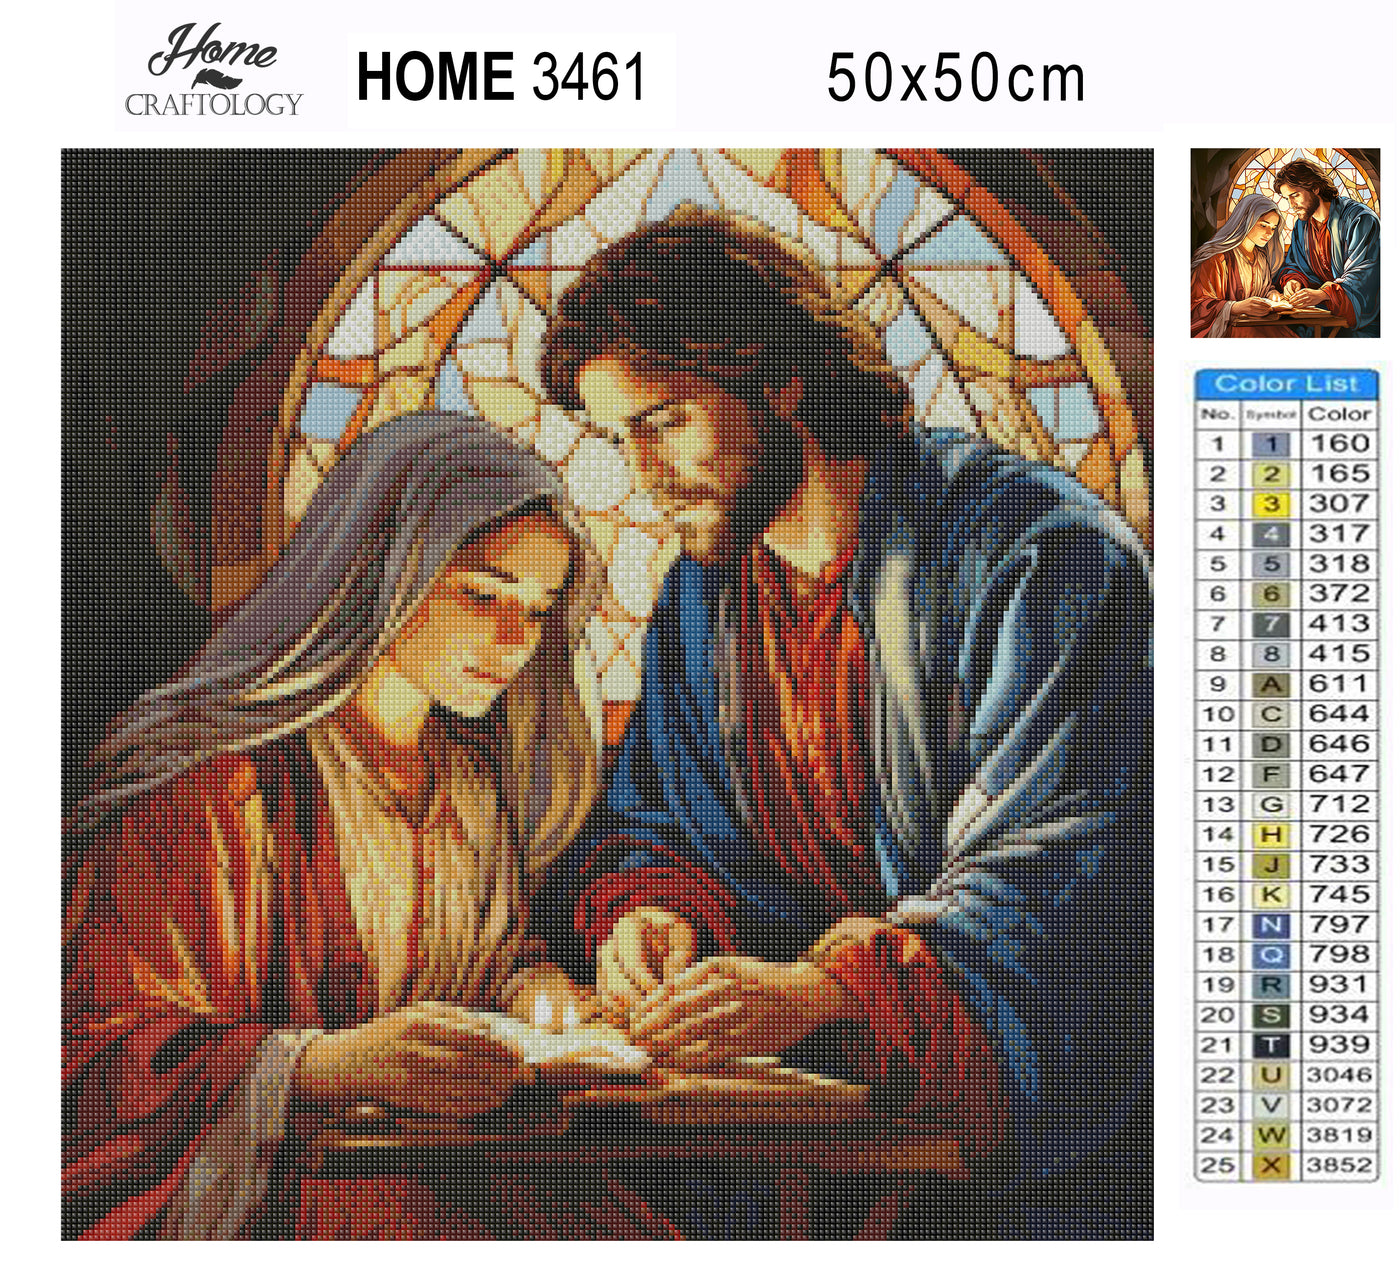 New! Mary and Joseph - Premium Diamond Painting Kit